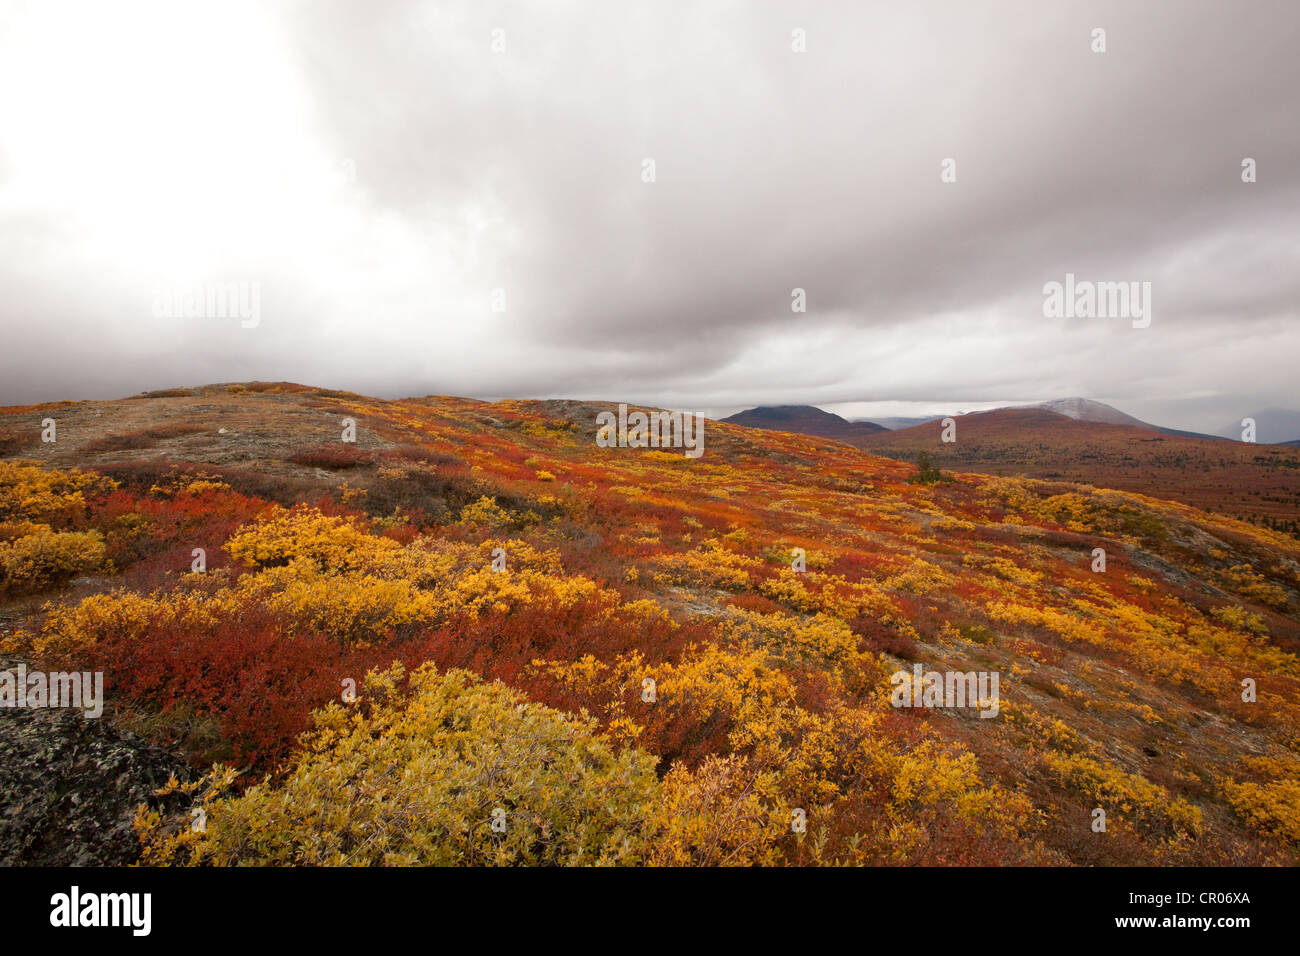 Sub-alpine Tundra, Indian Summer, Blätter in Herbstfarben, Herbst, in der Nähe von Fish Lake, Yukon Territorium, Kanada Stockfoto